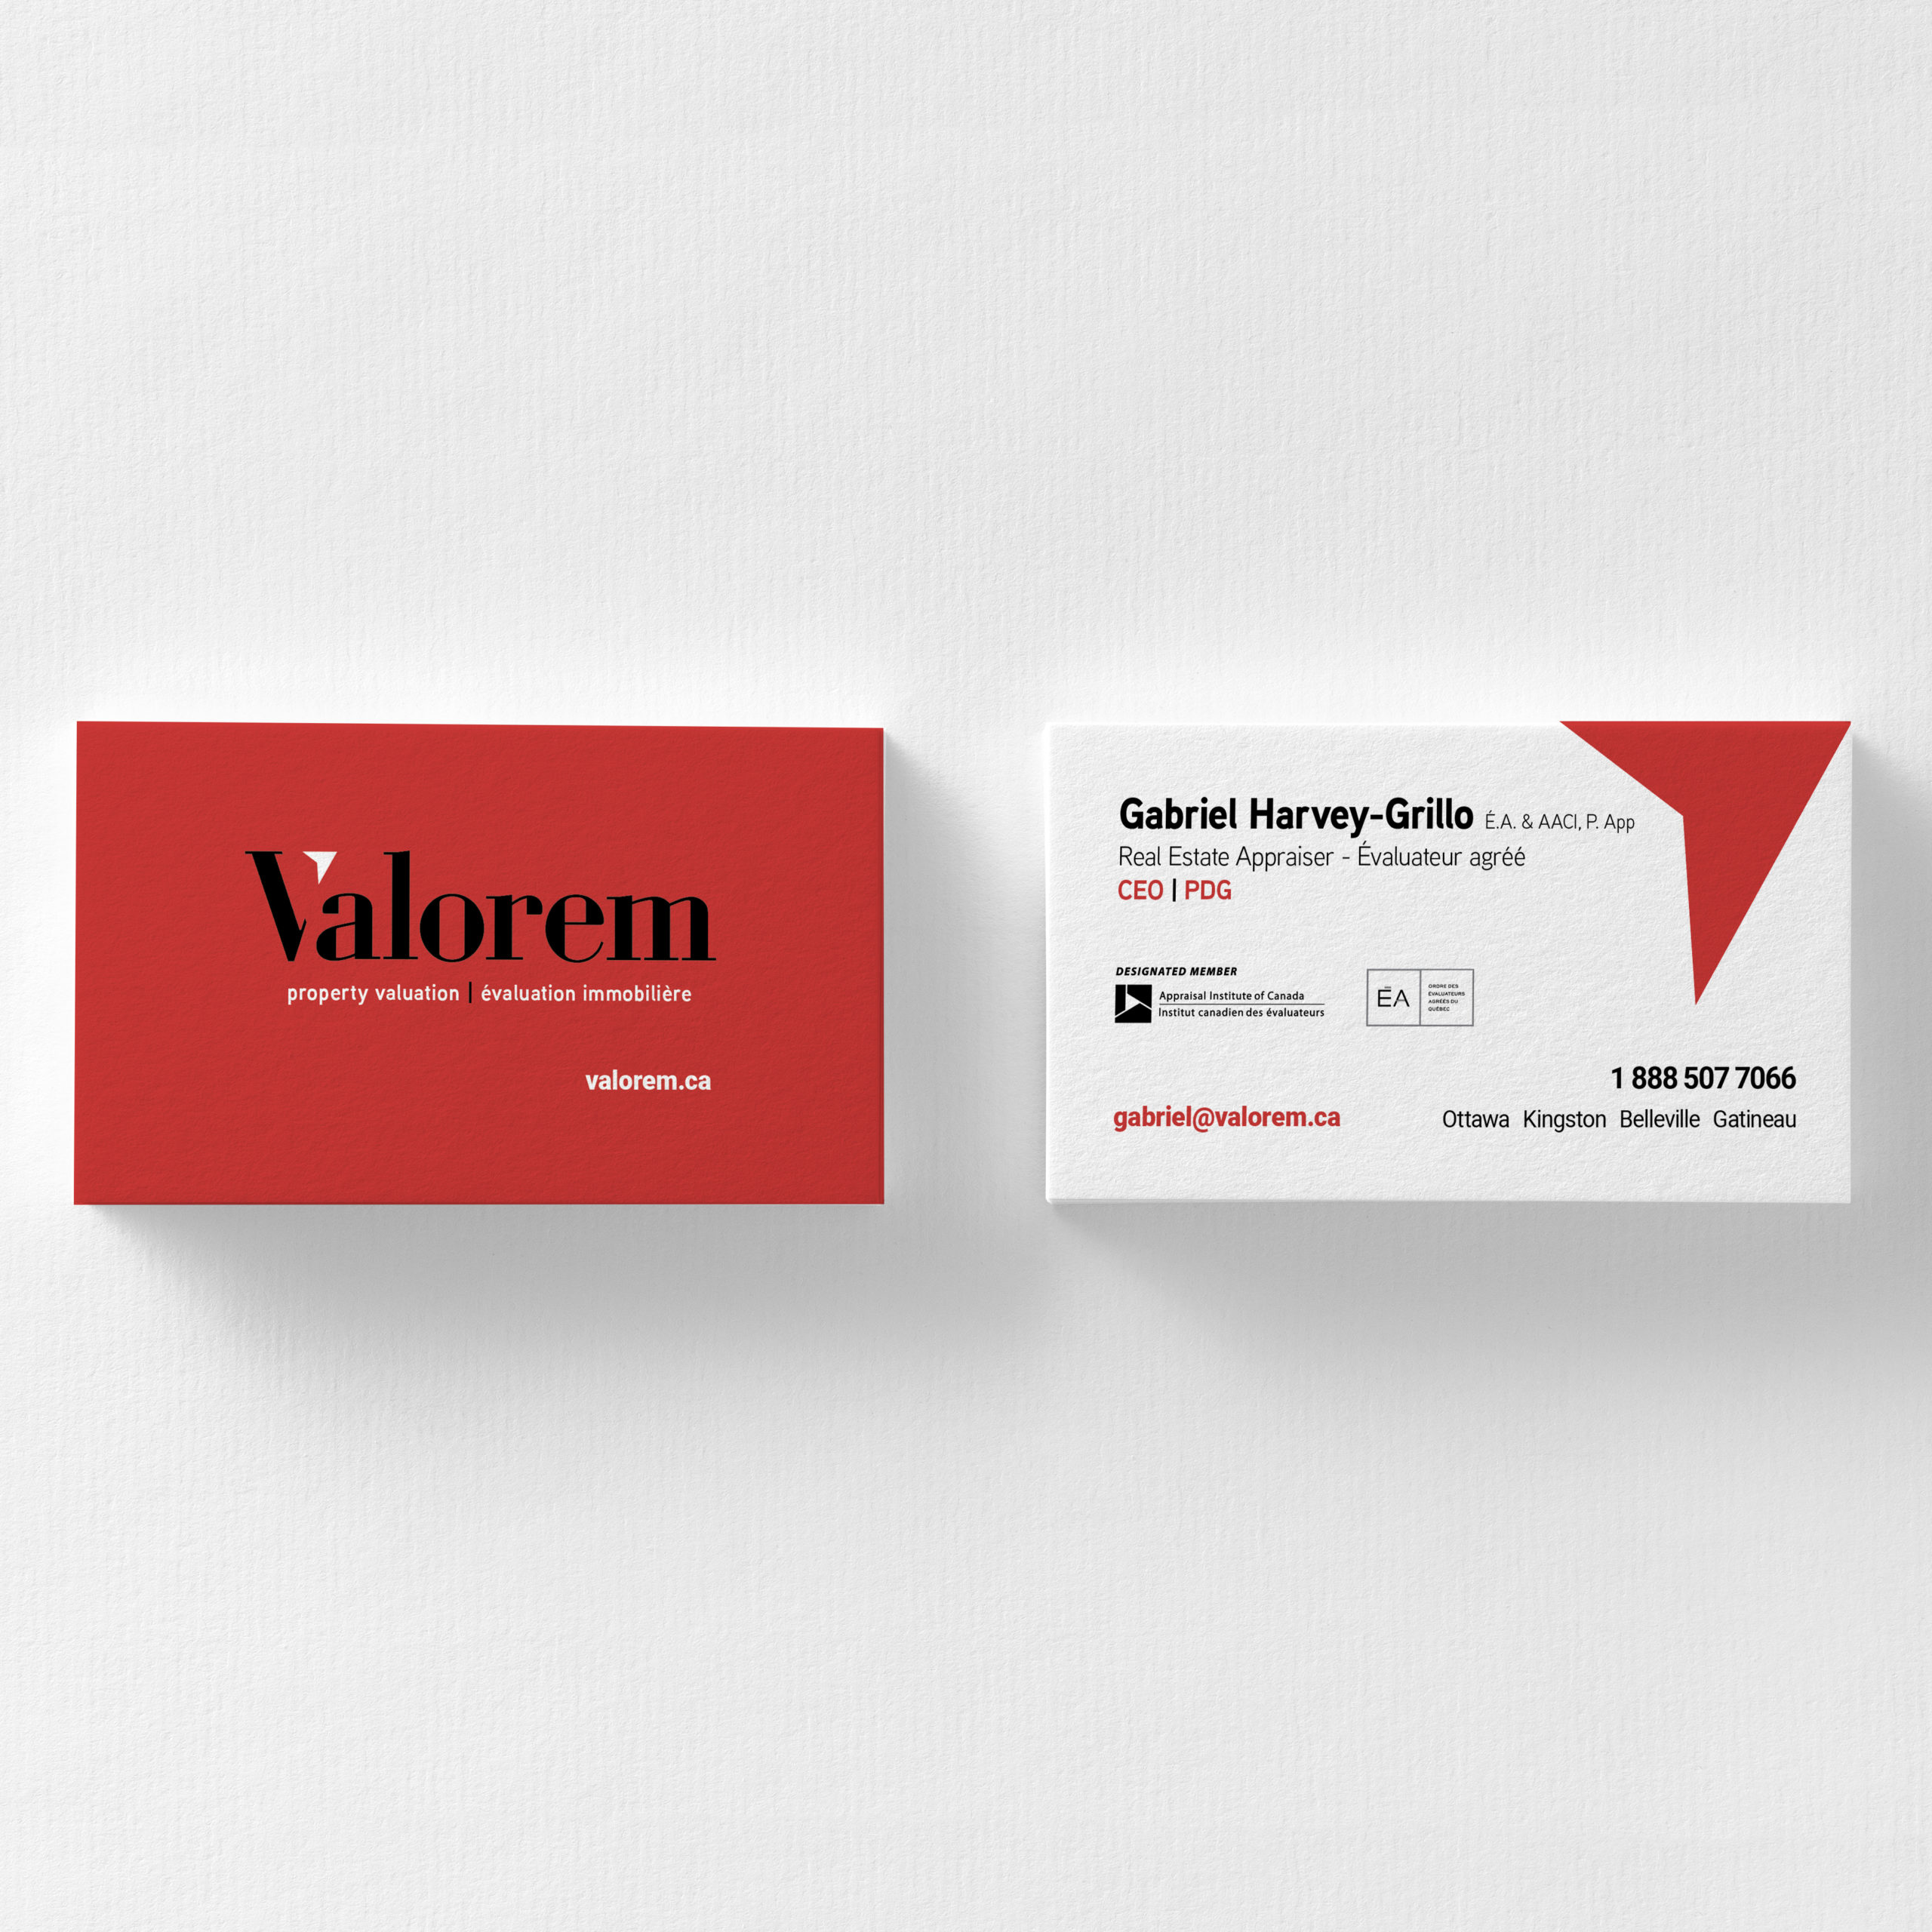 Valorem business card | Brand communications tool